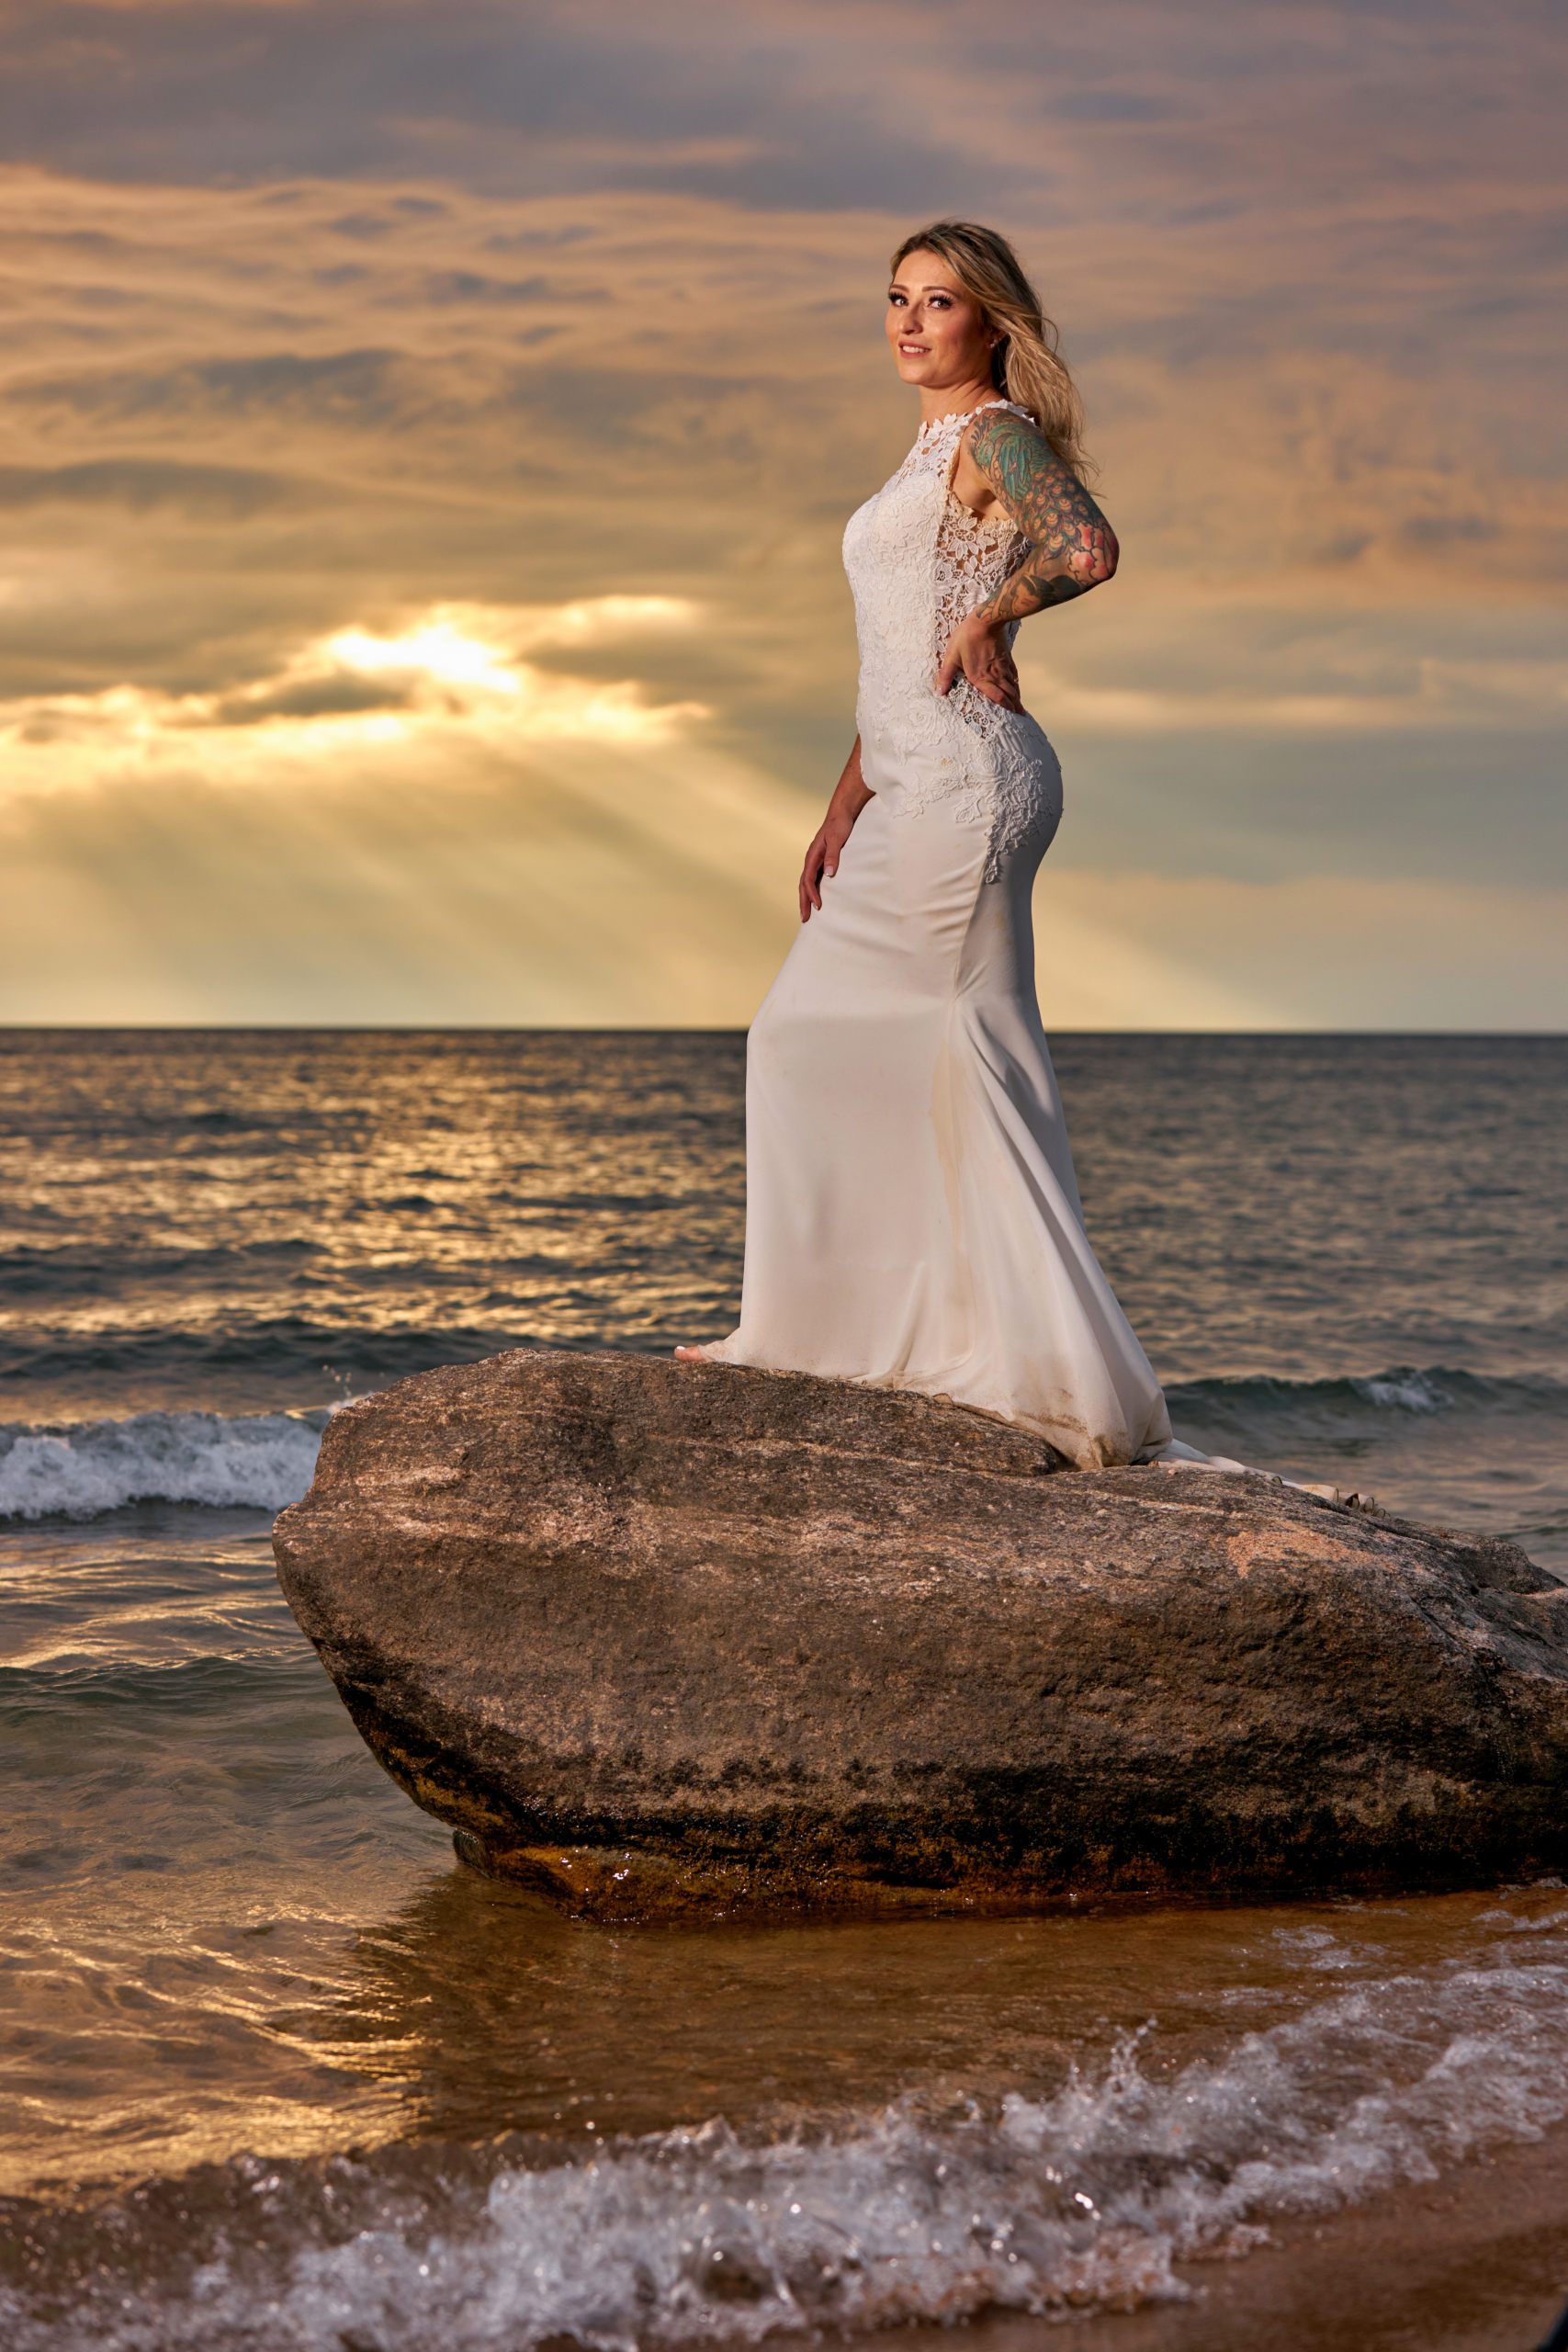 Bride at Sunset on Rocks in Georgian Bay